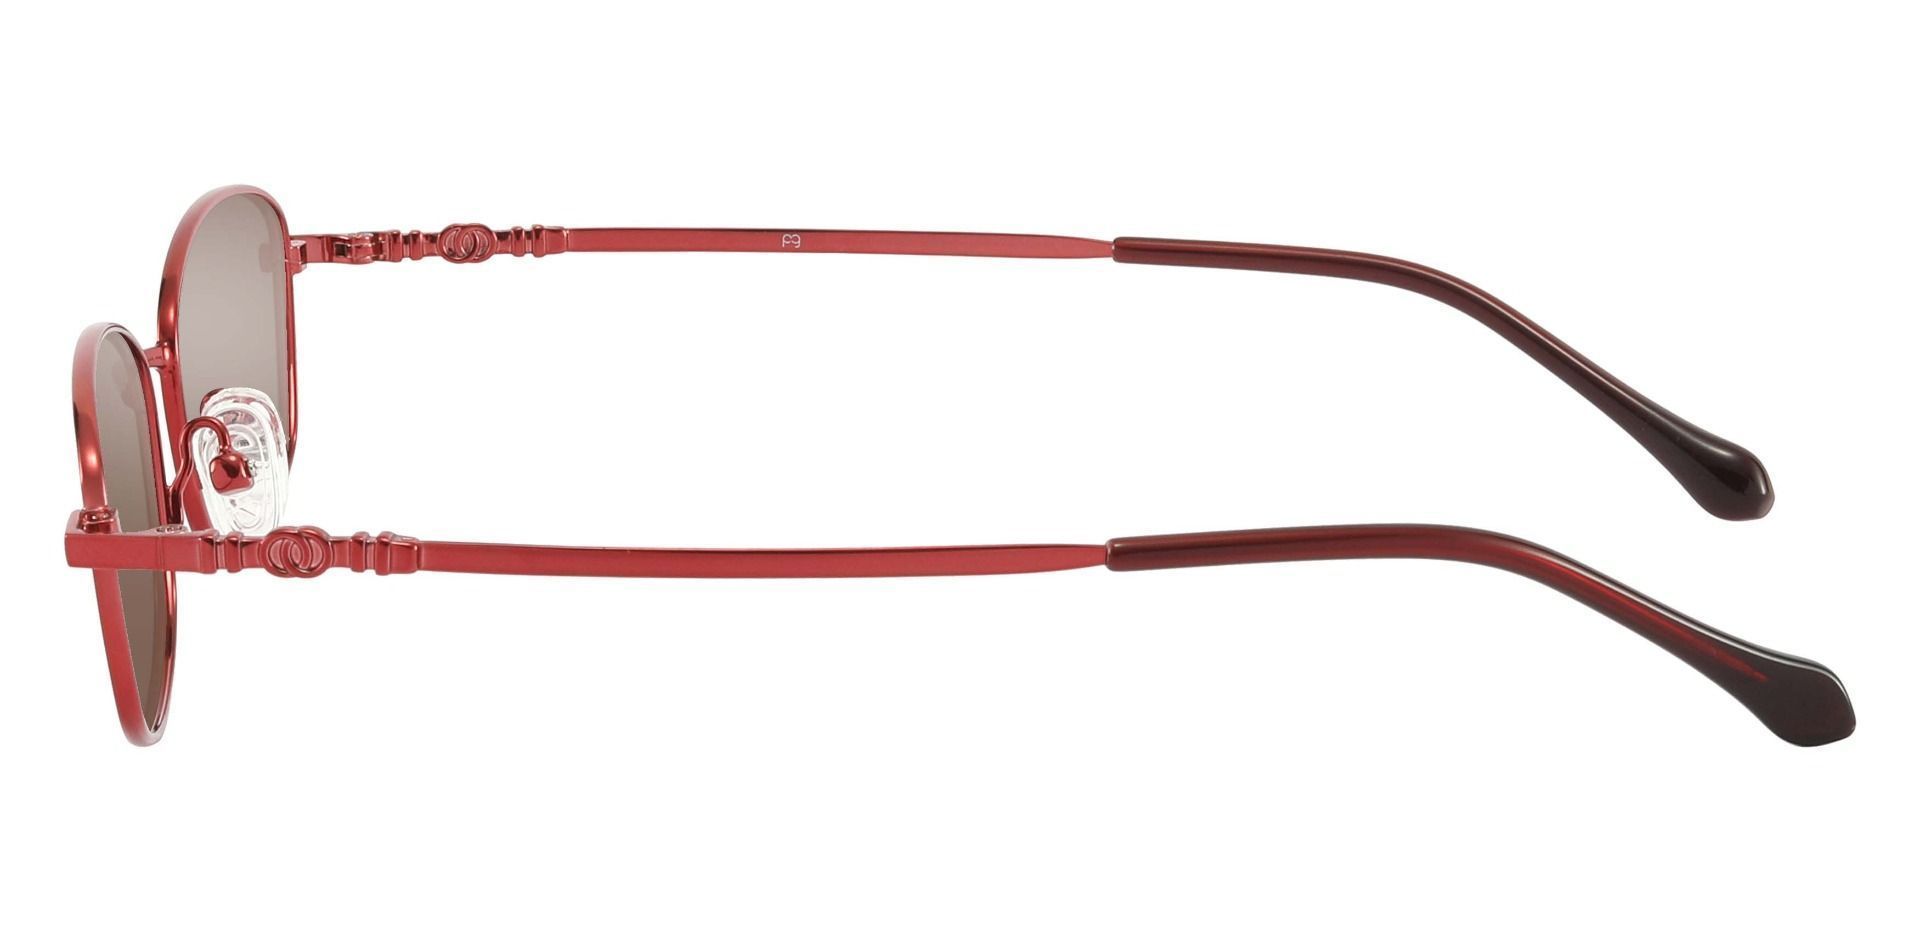 Naples Rectangle Progressive Sunglasses - Red Frame With Brown Lenses